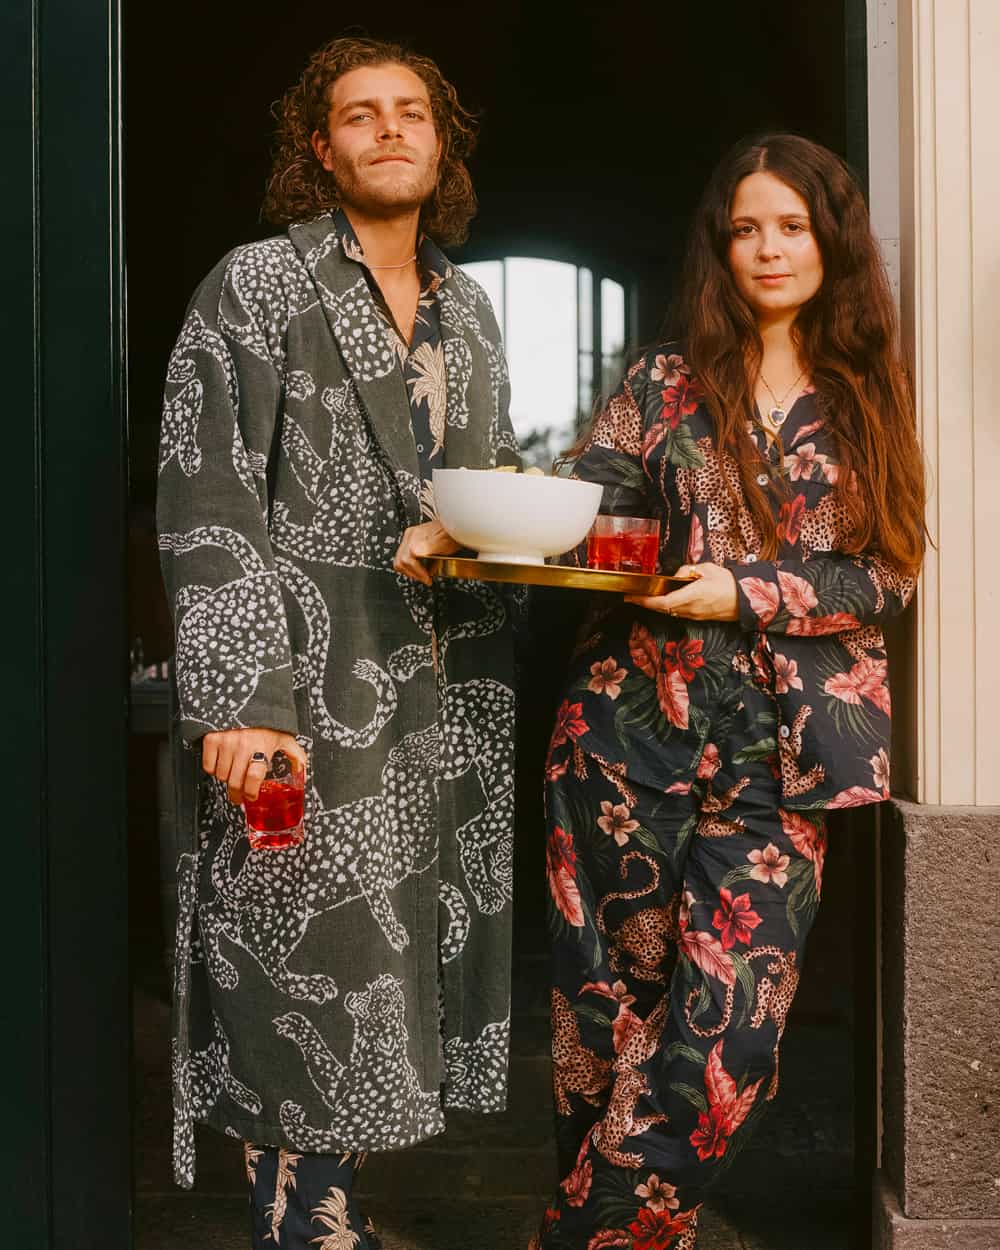 Man and woman wearing printed Desmond & Dempsey pajamas and robes